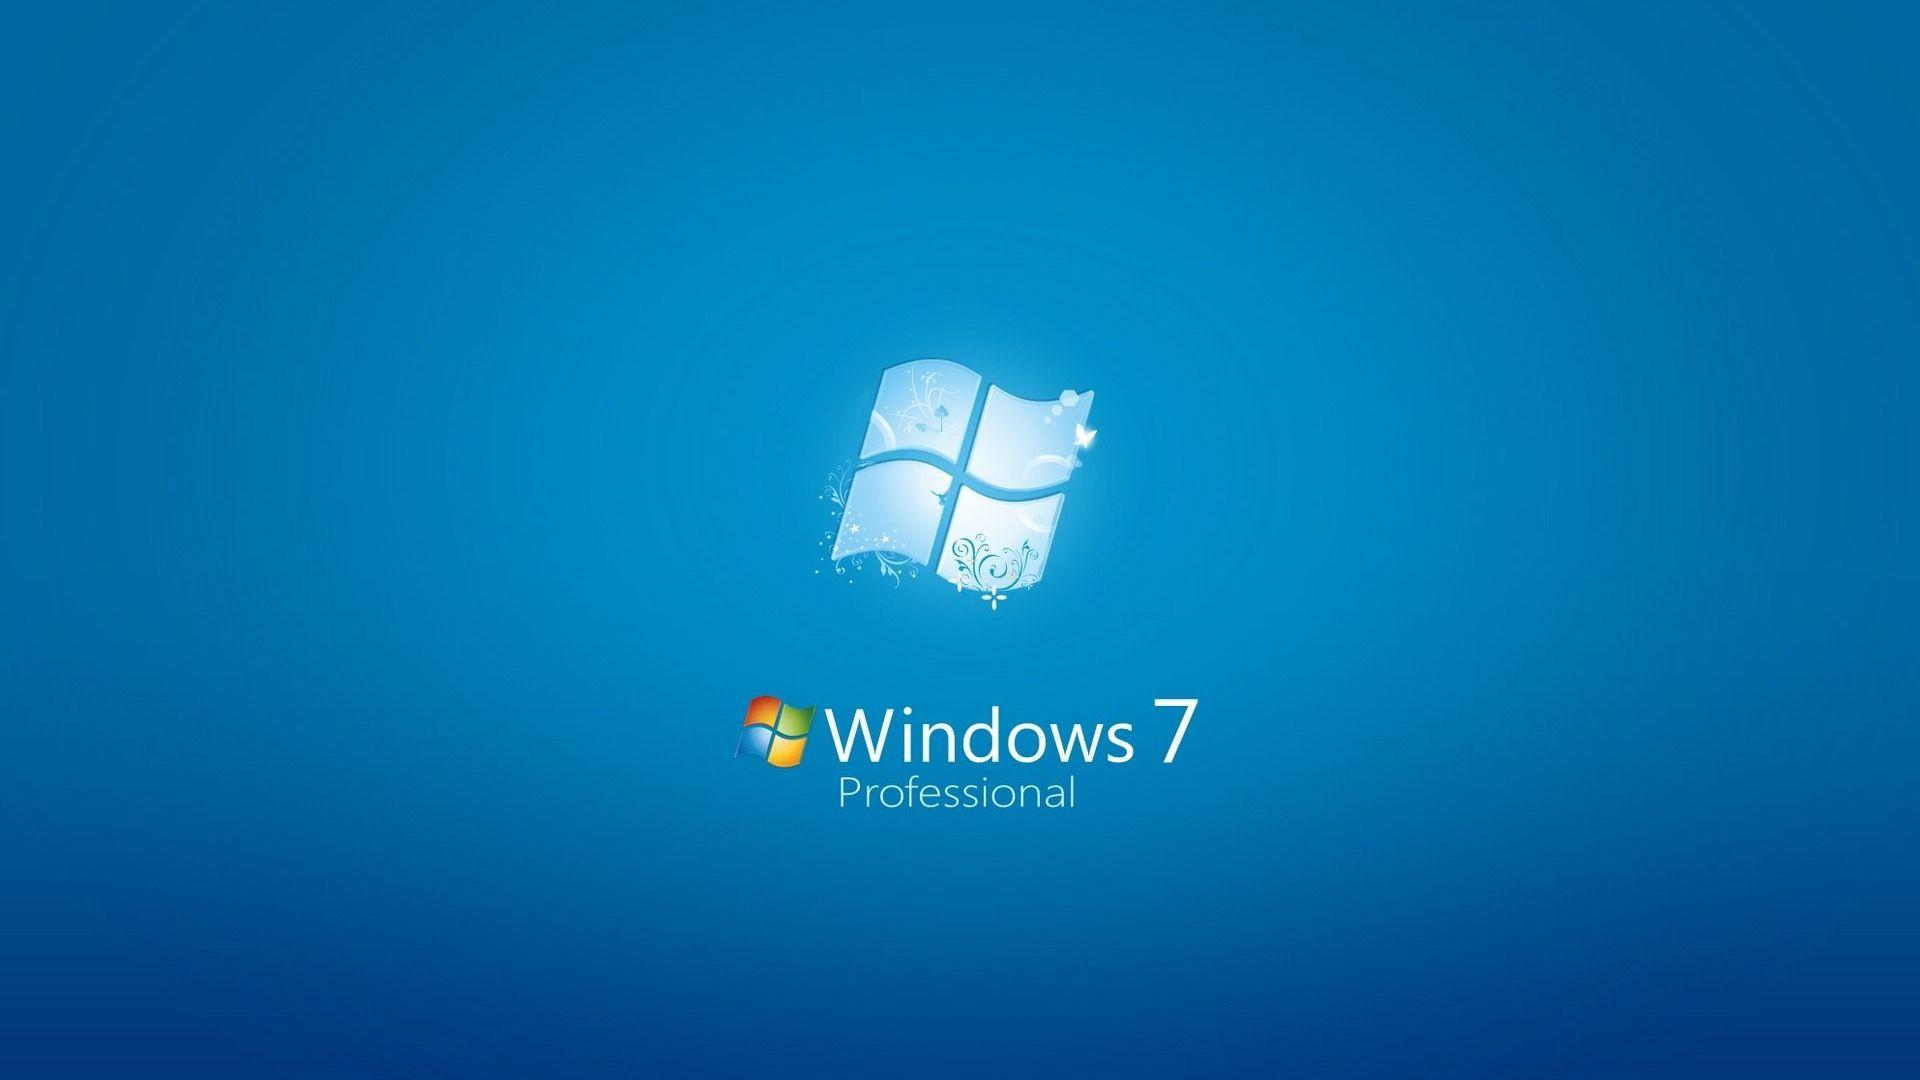 Wallpaper Windows 7 Ultimate Hd 3d For Laptop Image Num 68